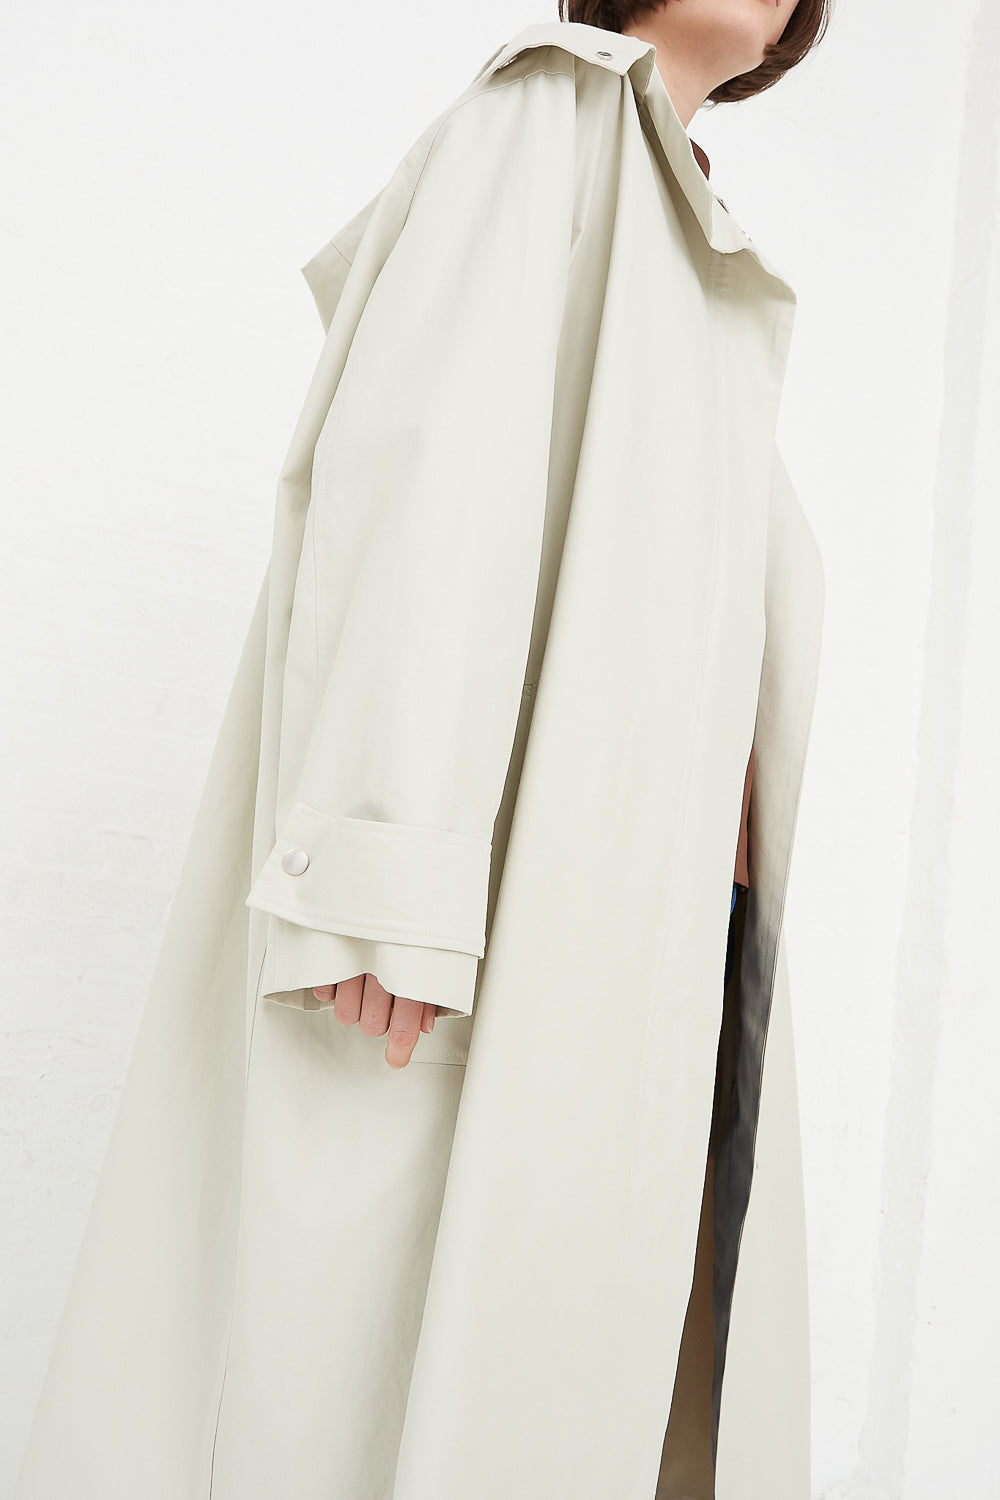 Studio Nicholson - Tana Raincoat in Dove sleeve detail side view